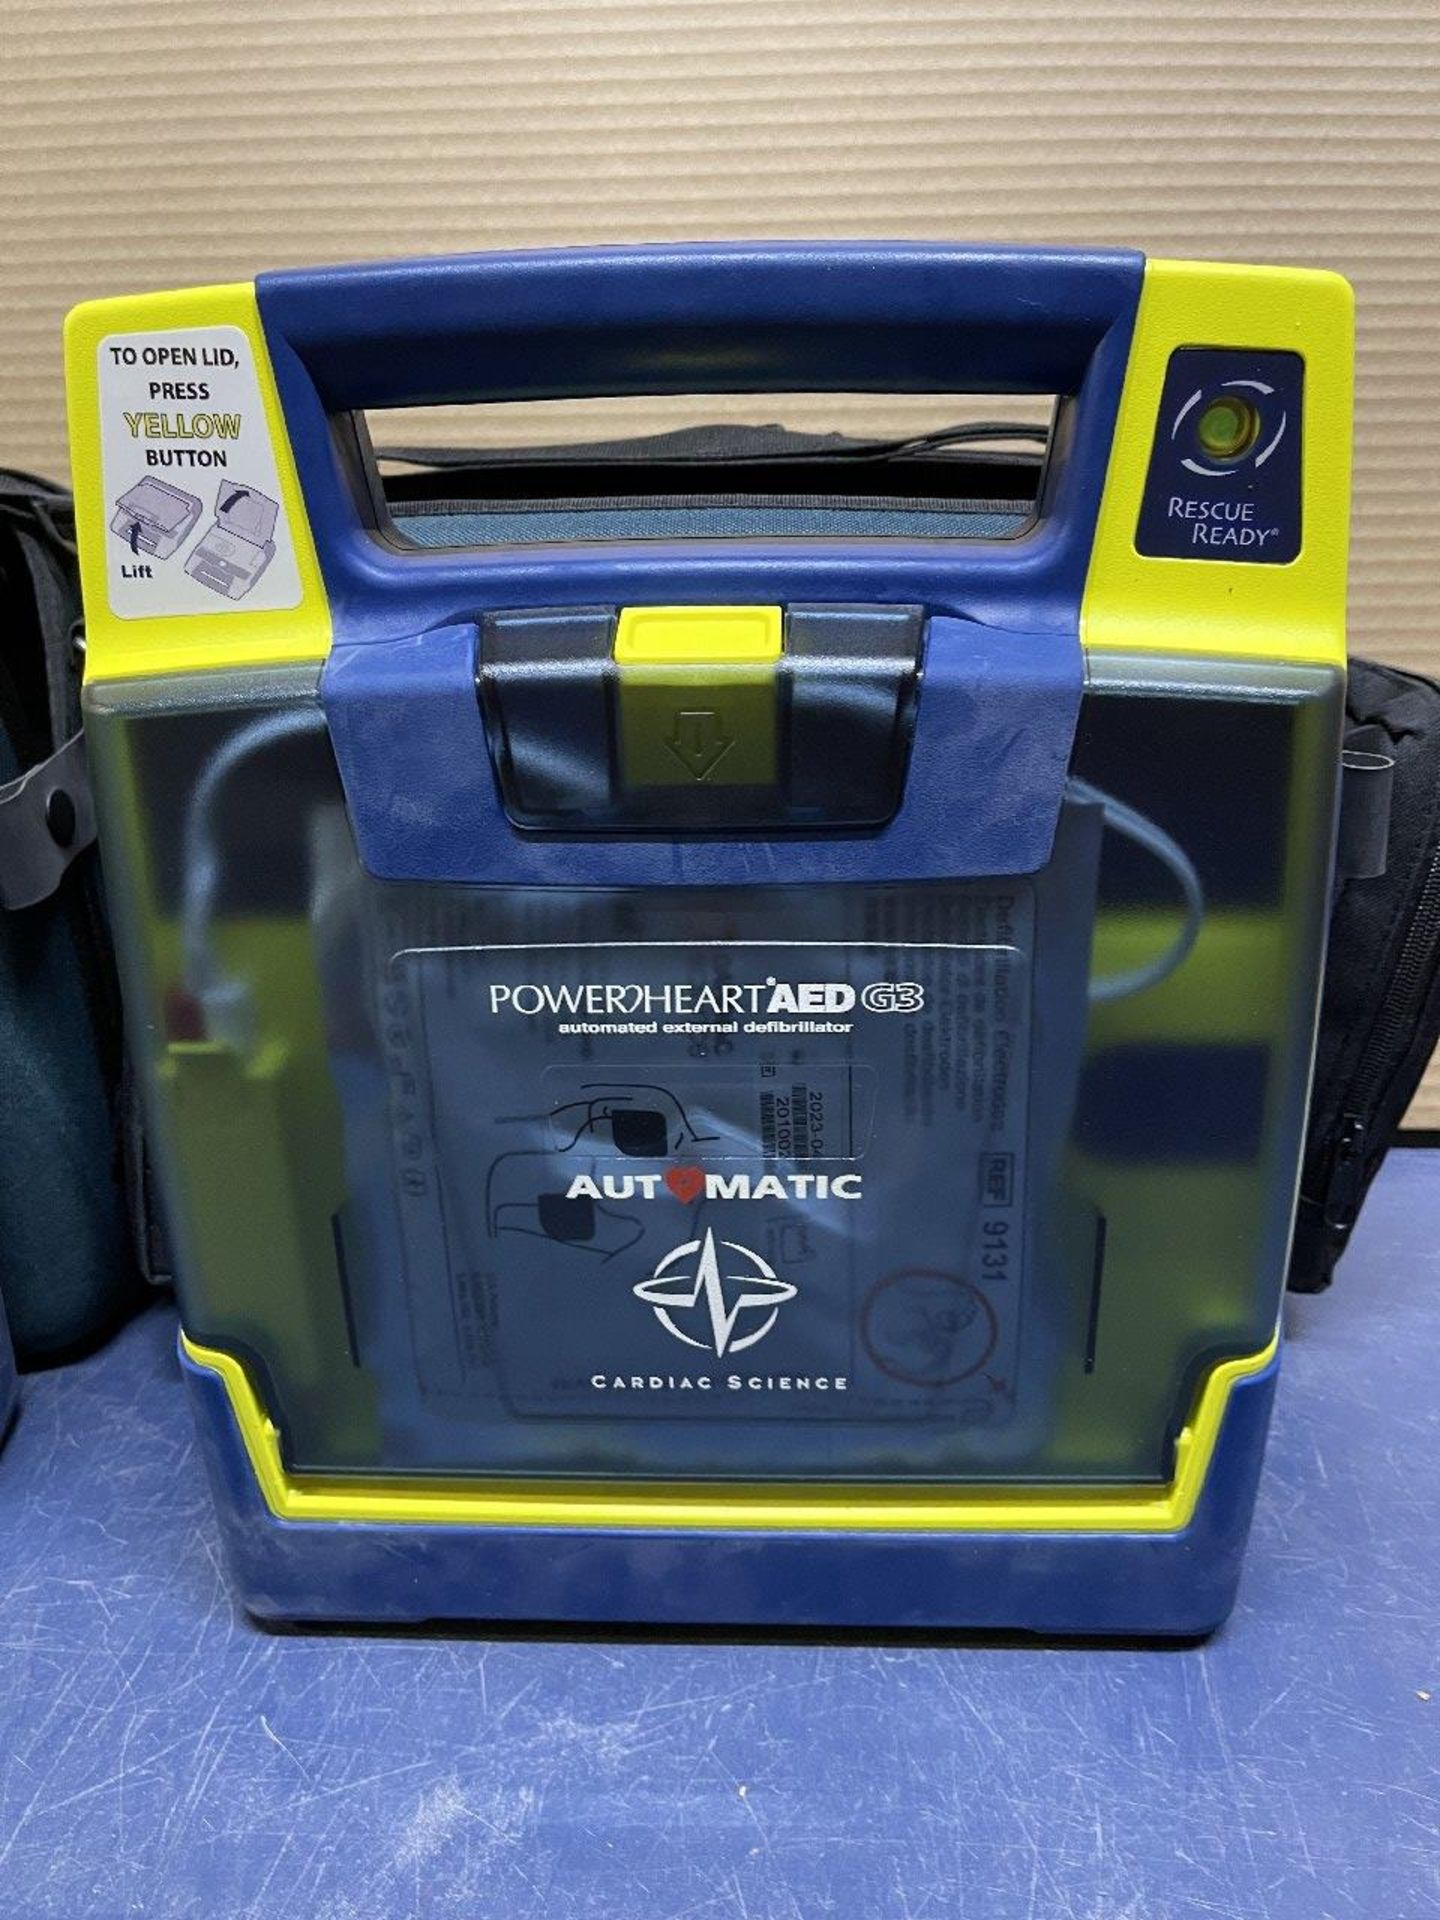 Cardiac Science Powerheart AED G3 Defibrillators - Image 5 of 6